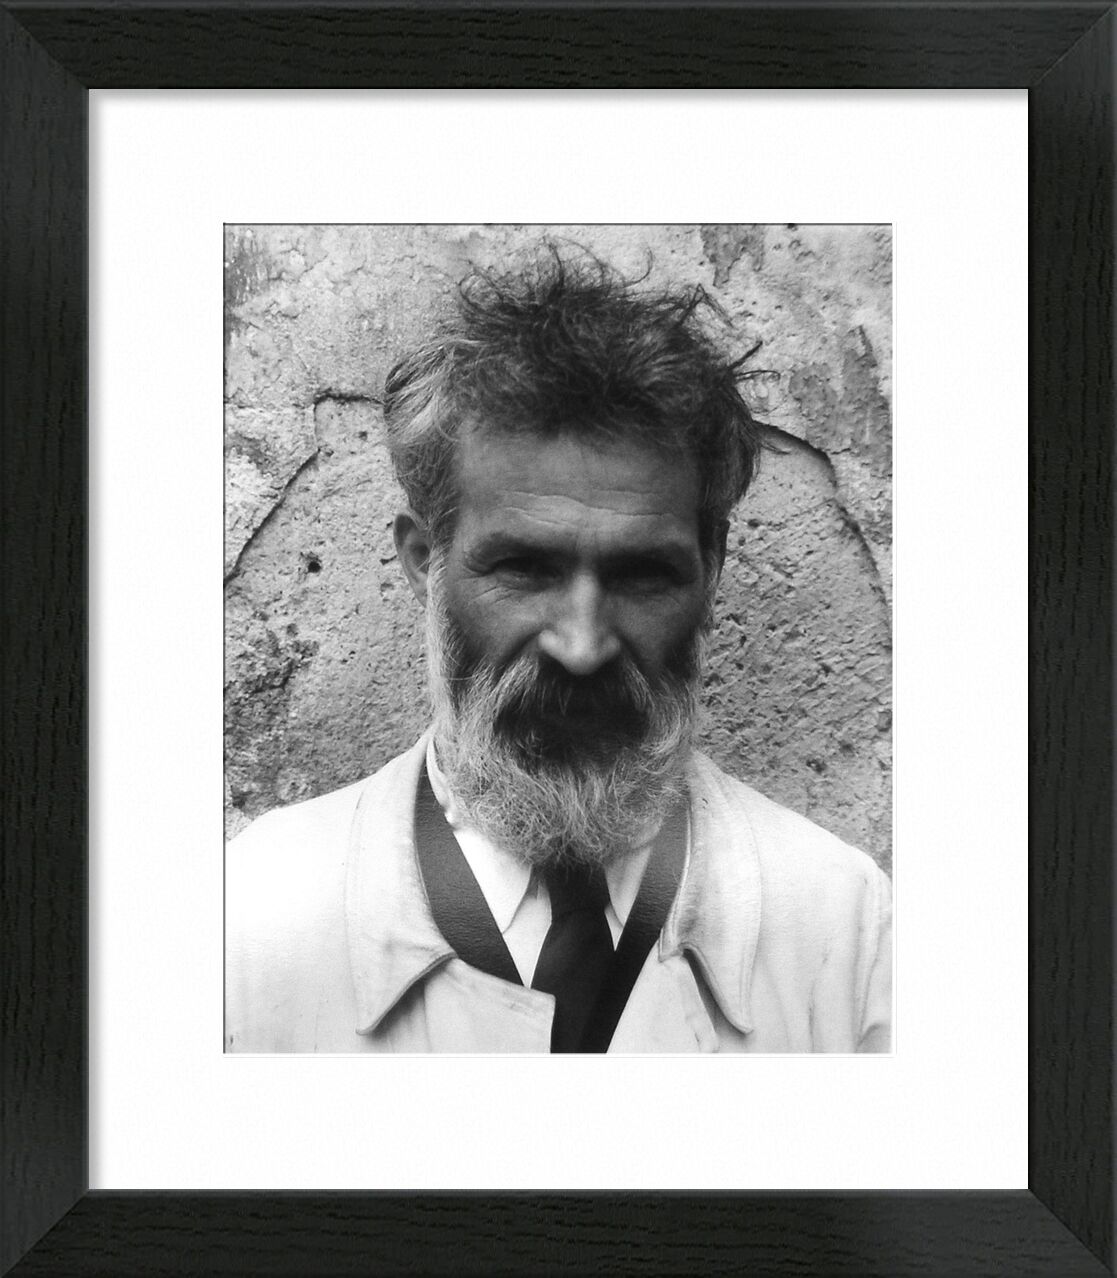 Brancusi in his workshop - Edward Steichen 1922 desde Bellas artes, Prodi Art, retrato, Edward Steichen, barba, blanco y negro, taller